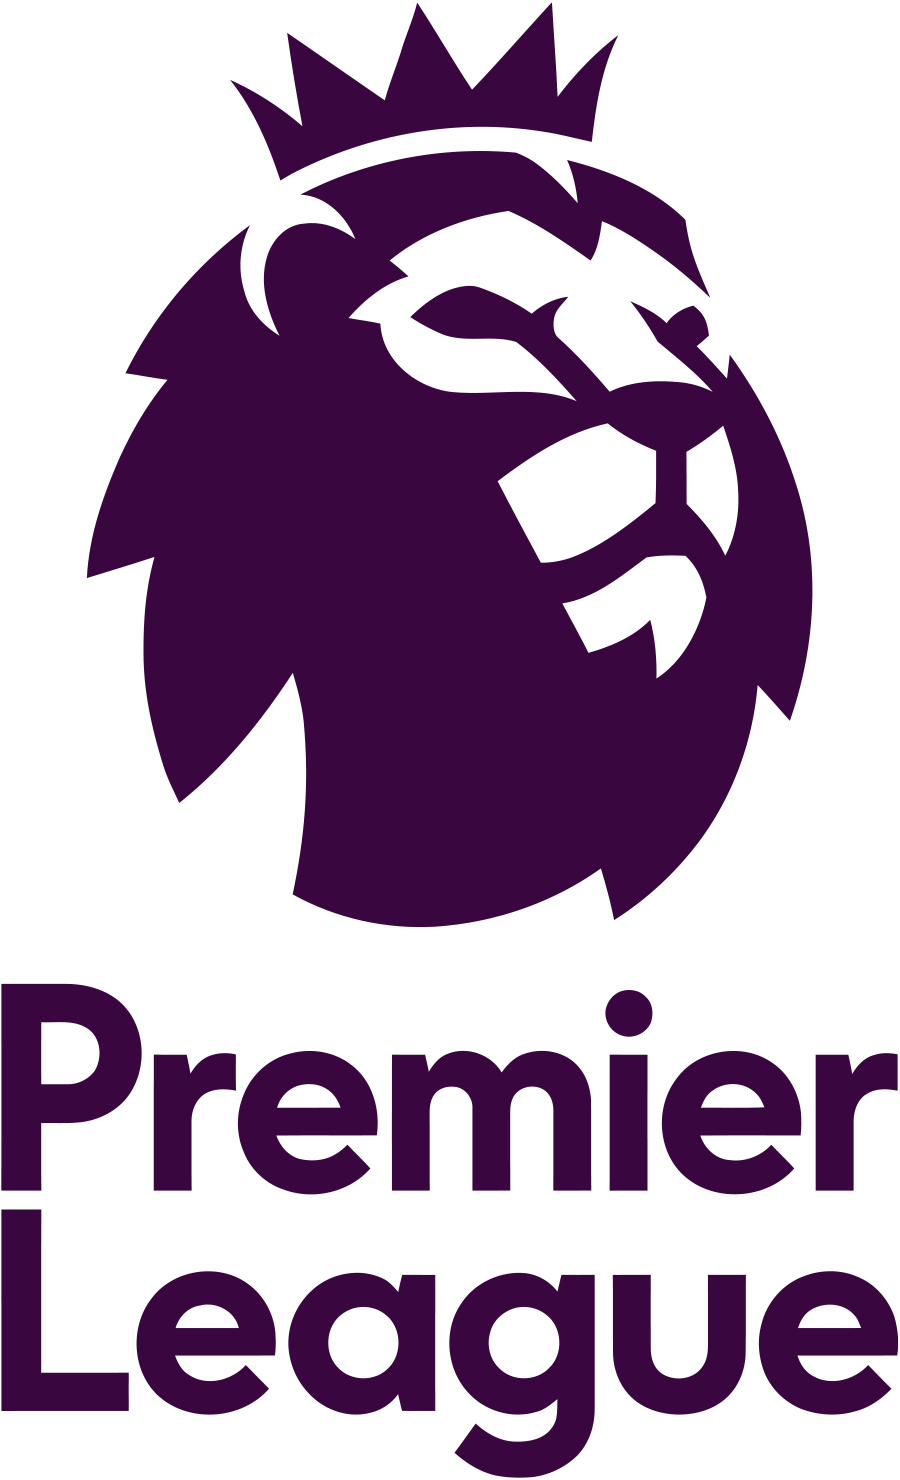 Premier-League Streams